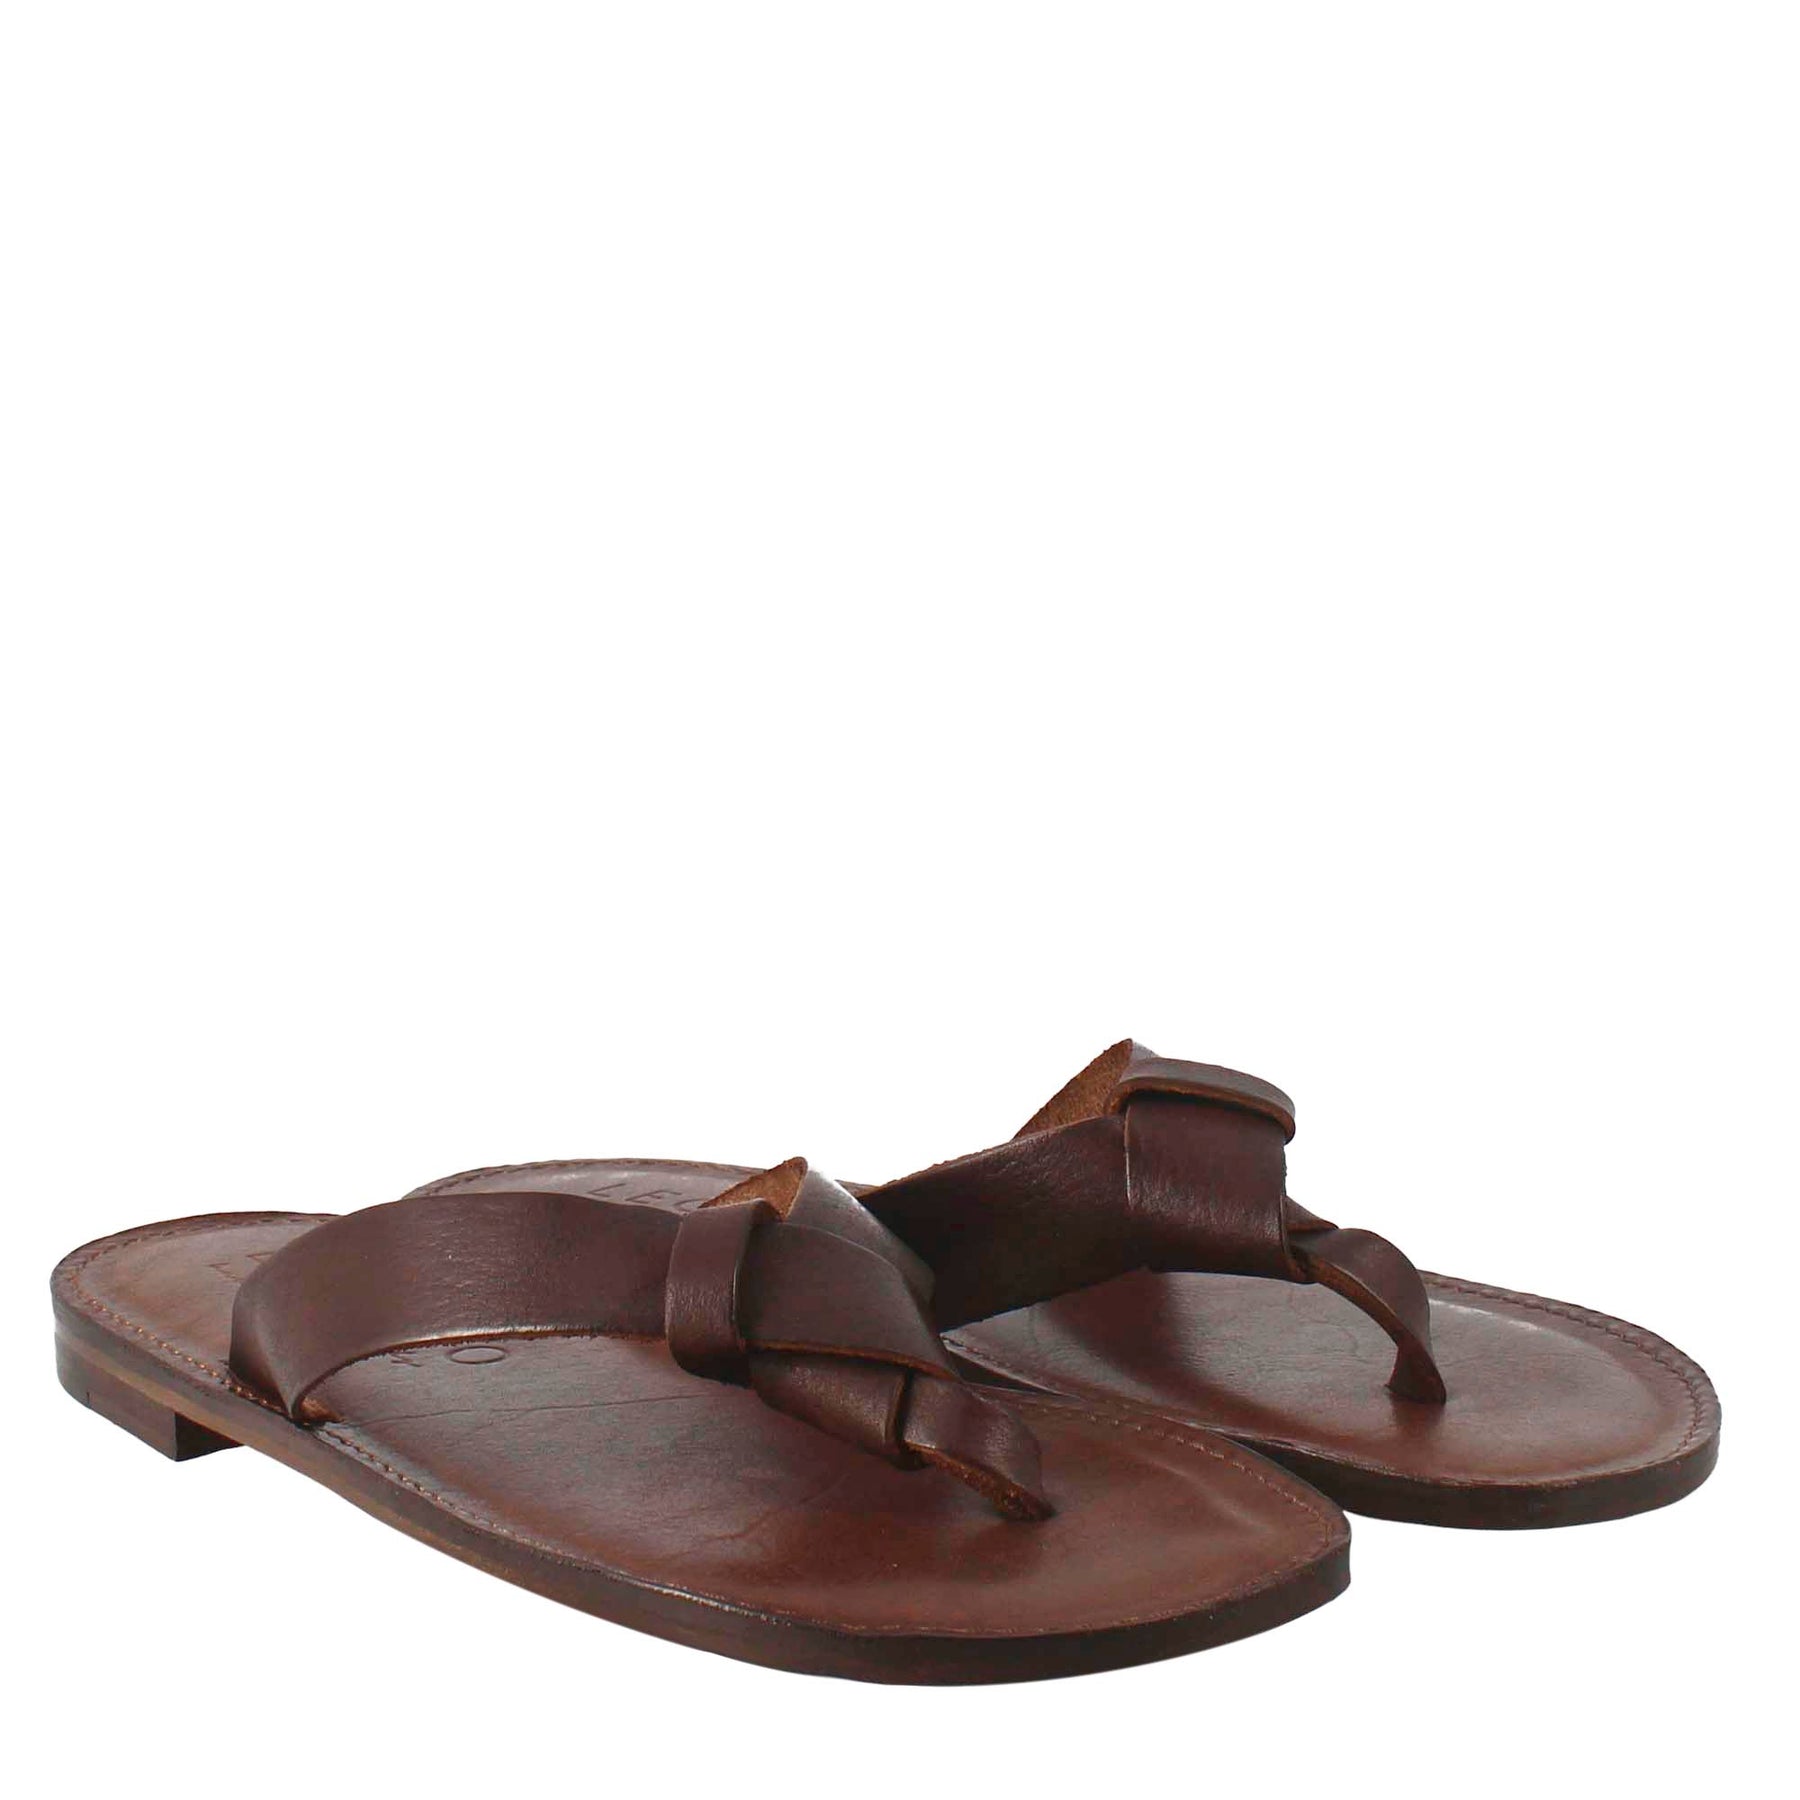 Men's gladiator sandals in Arezzo in brown leather